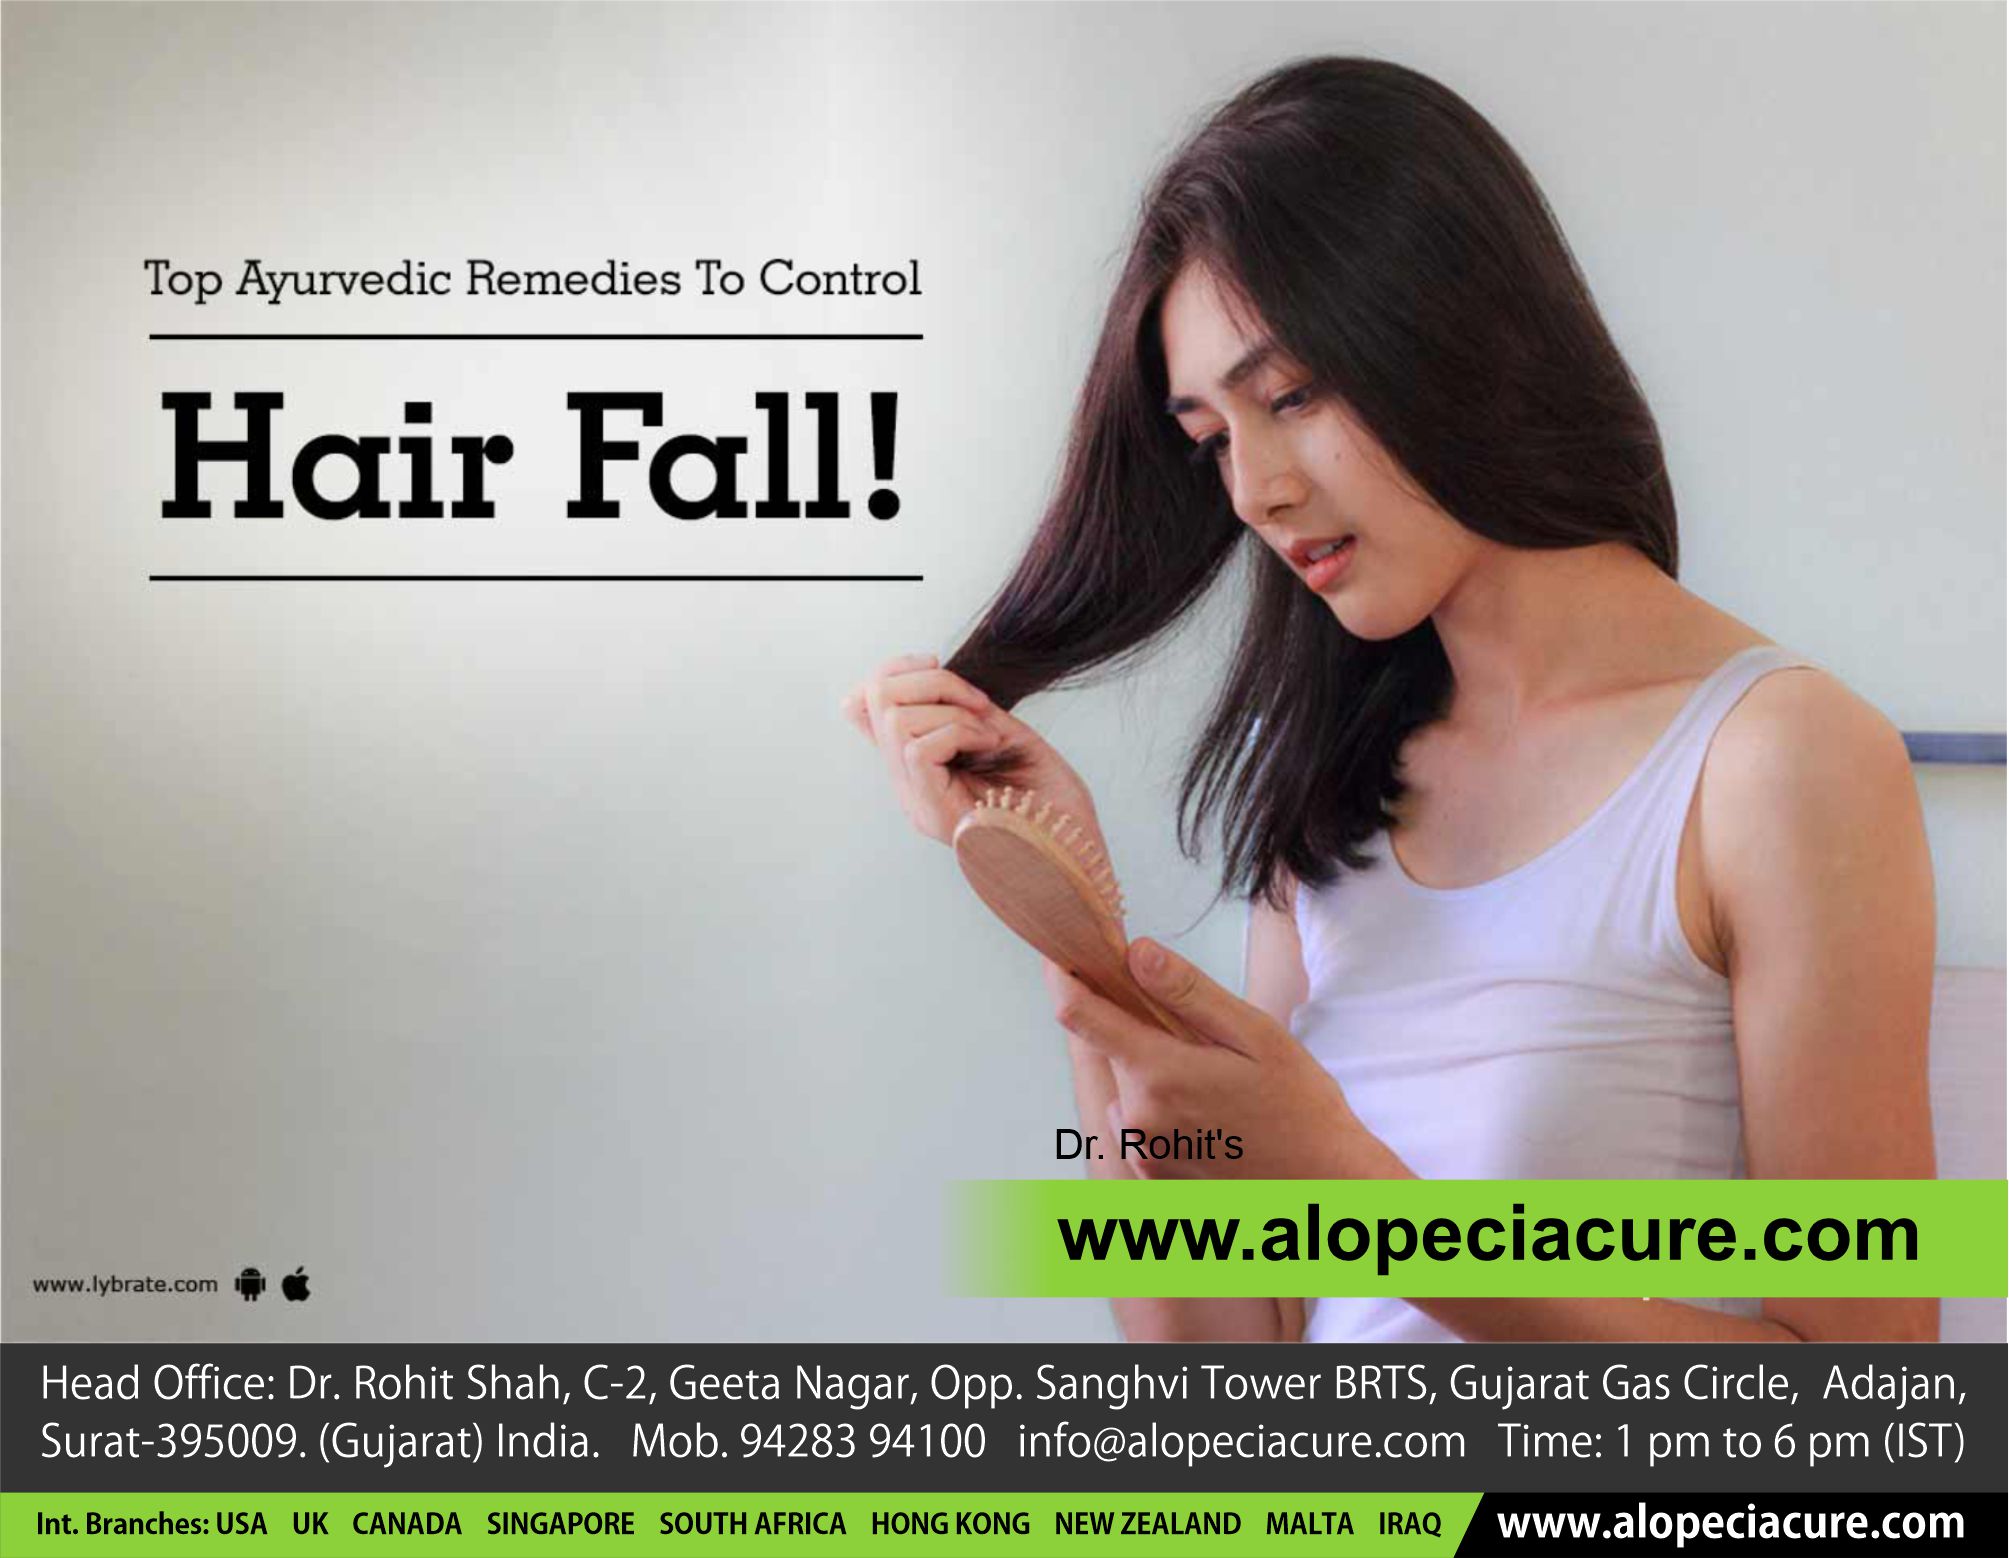 Top Ayurvedic Remedies to Control Hair Fall!